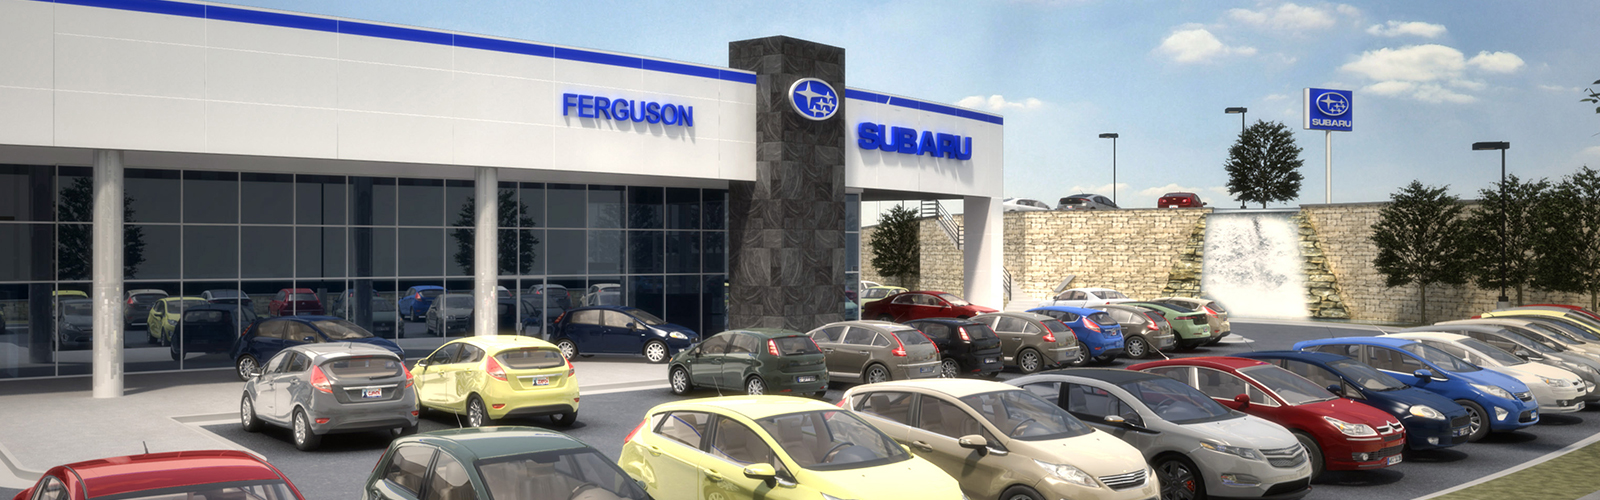 Ferguson-Subaru-Banner-1